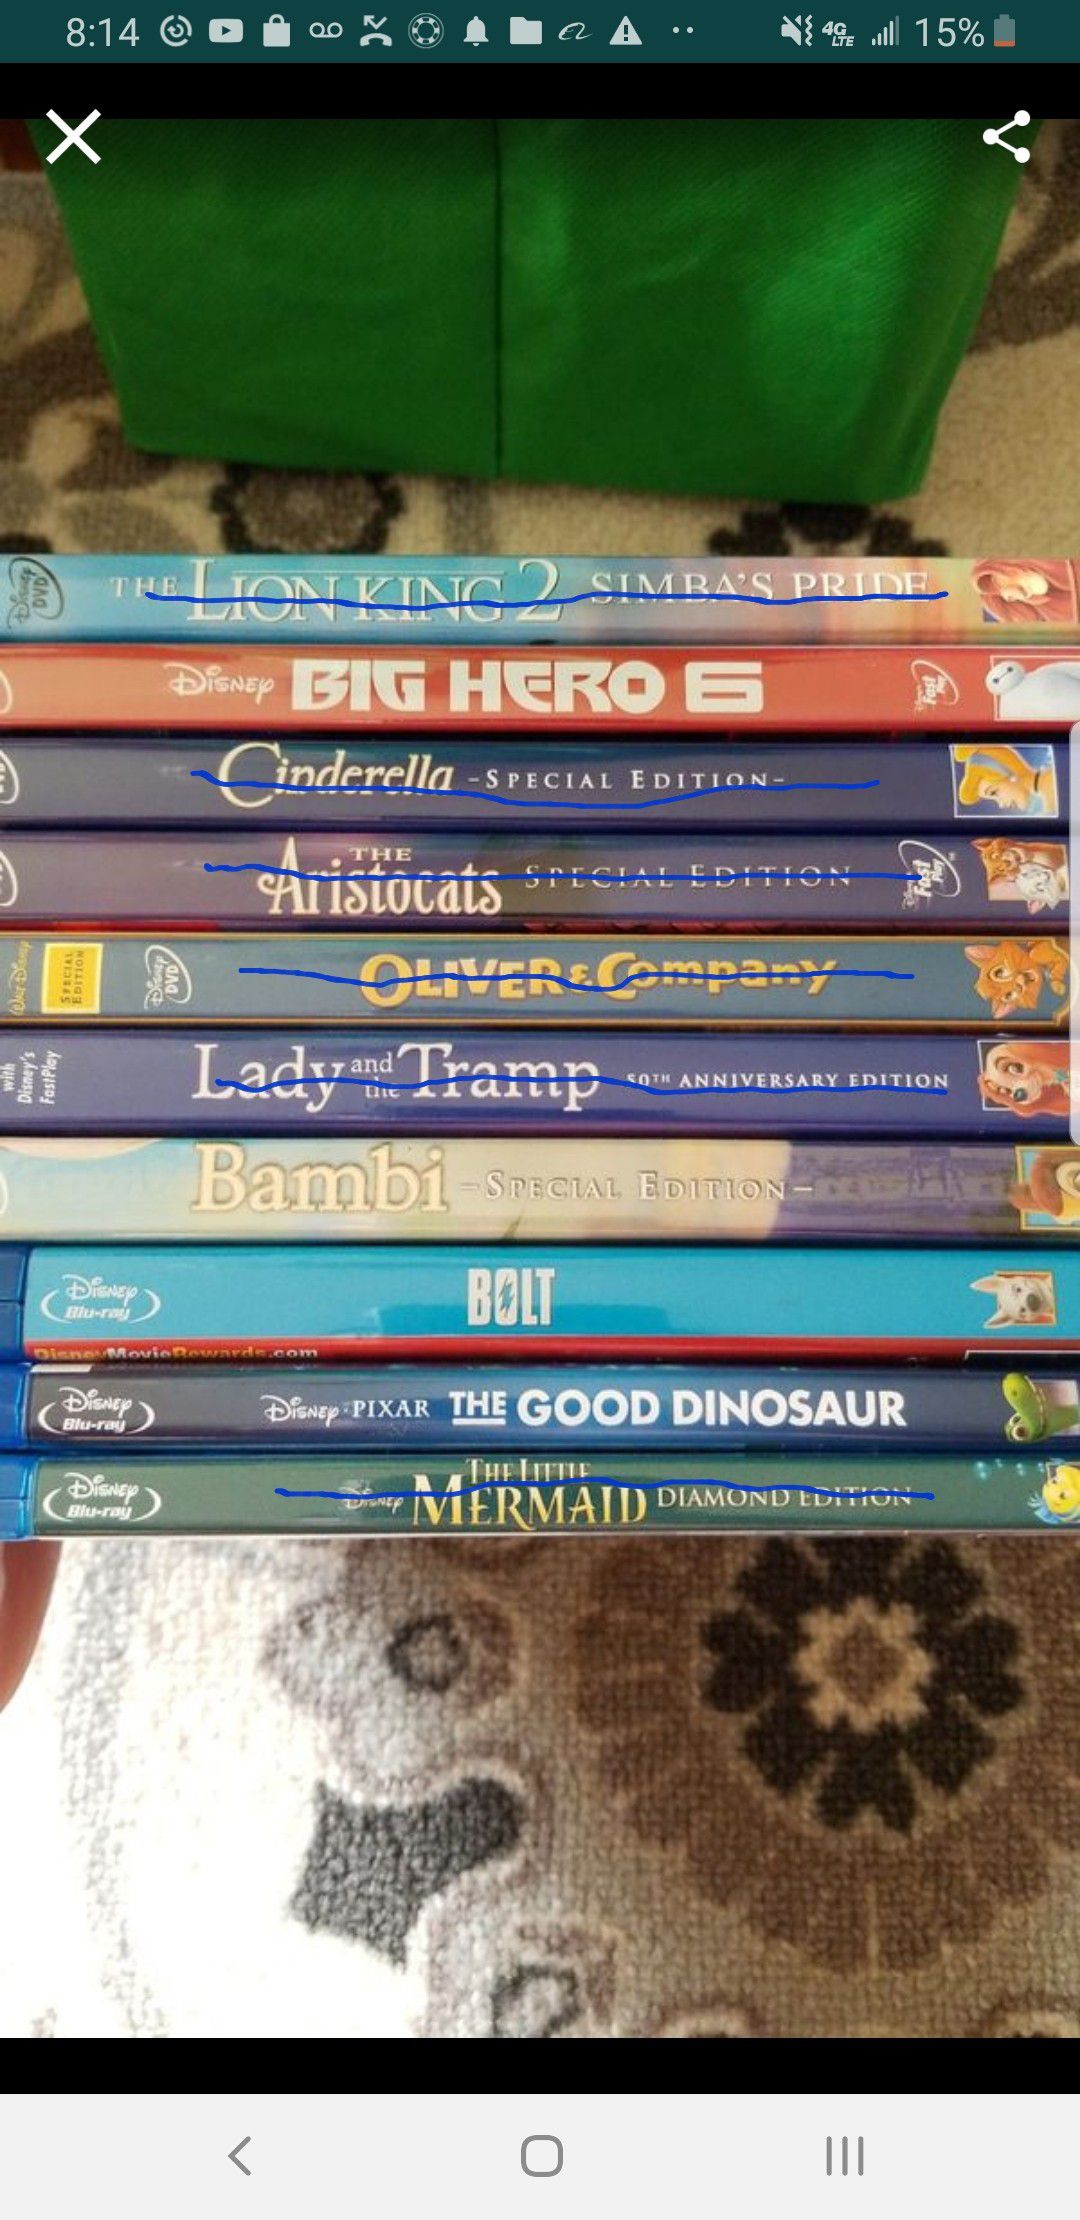 Disney DVD's and blu-rays